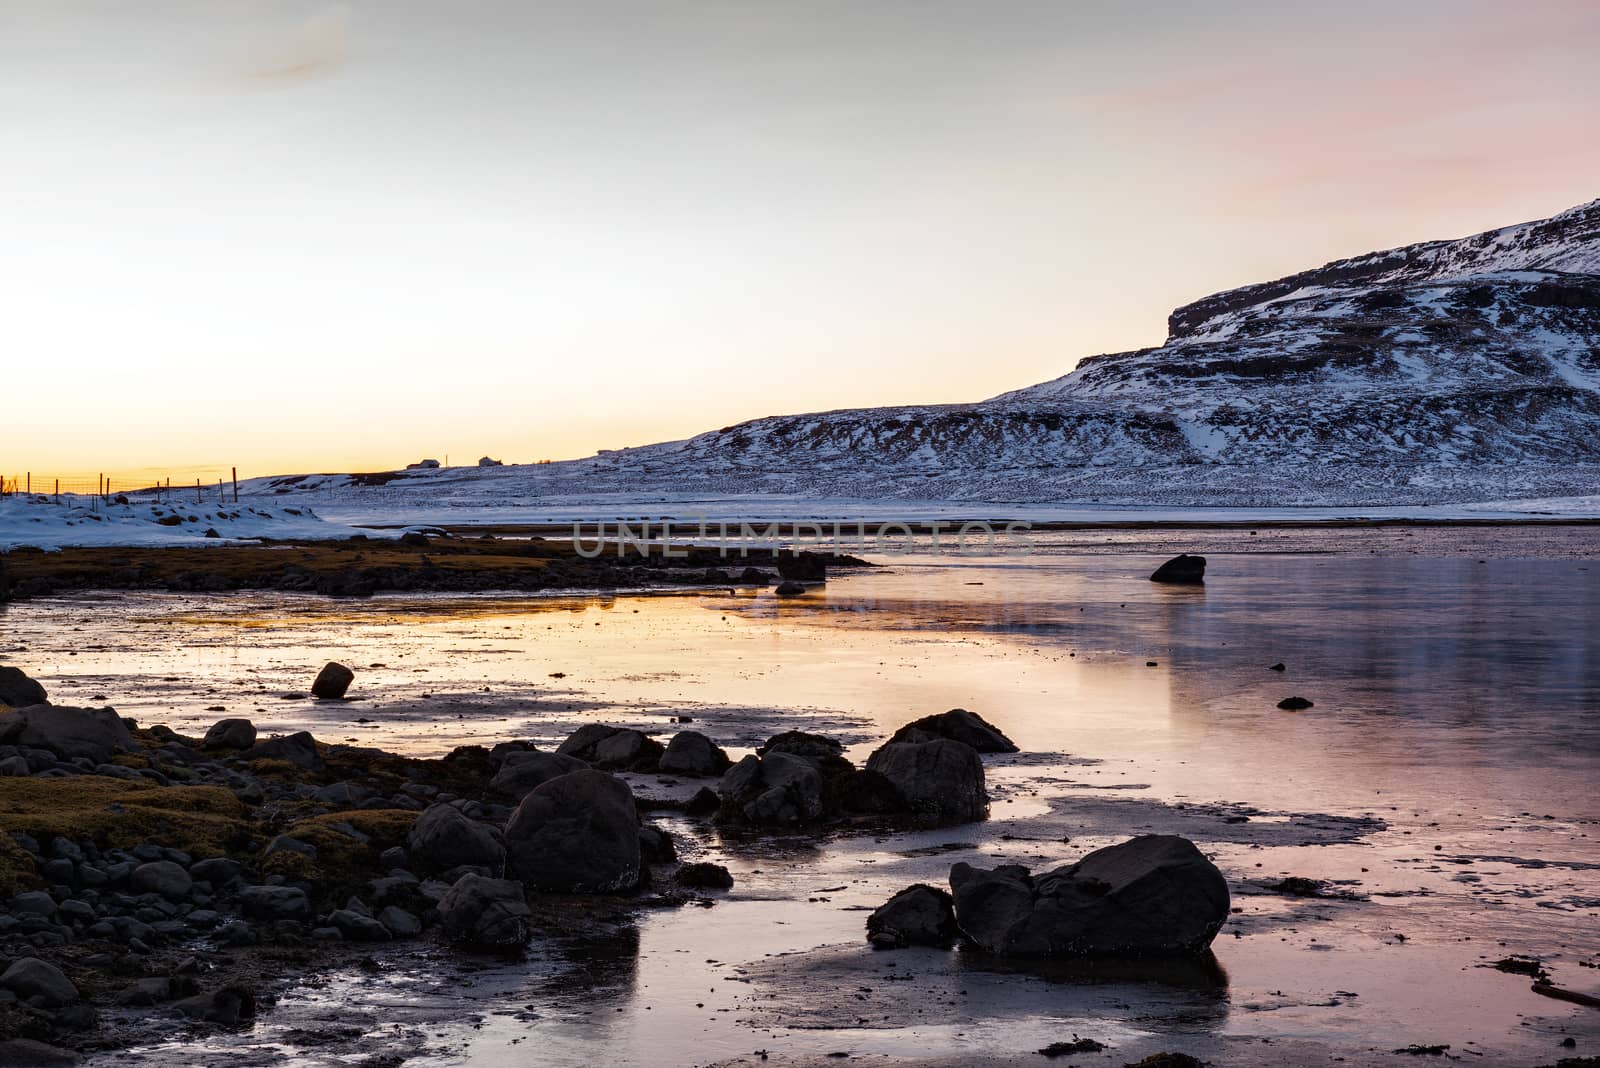 Mountains in Snaefellsnes peninsula at sunset, Iceland by LuigiMorbidelli